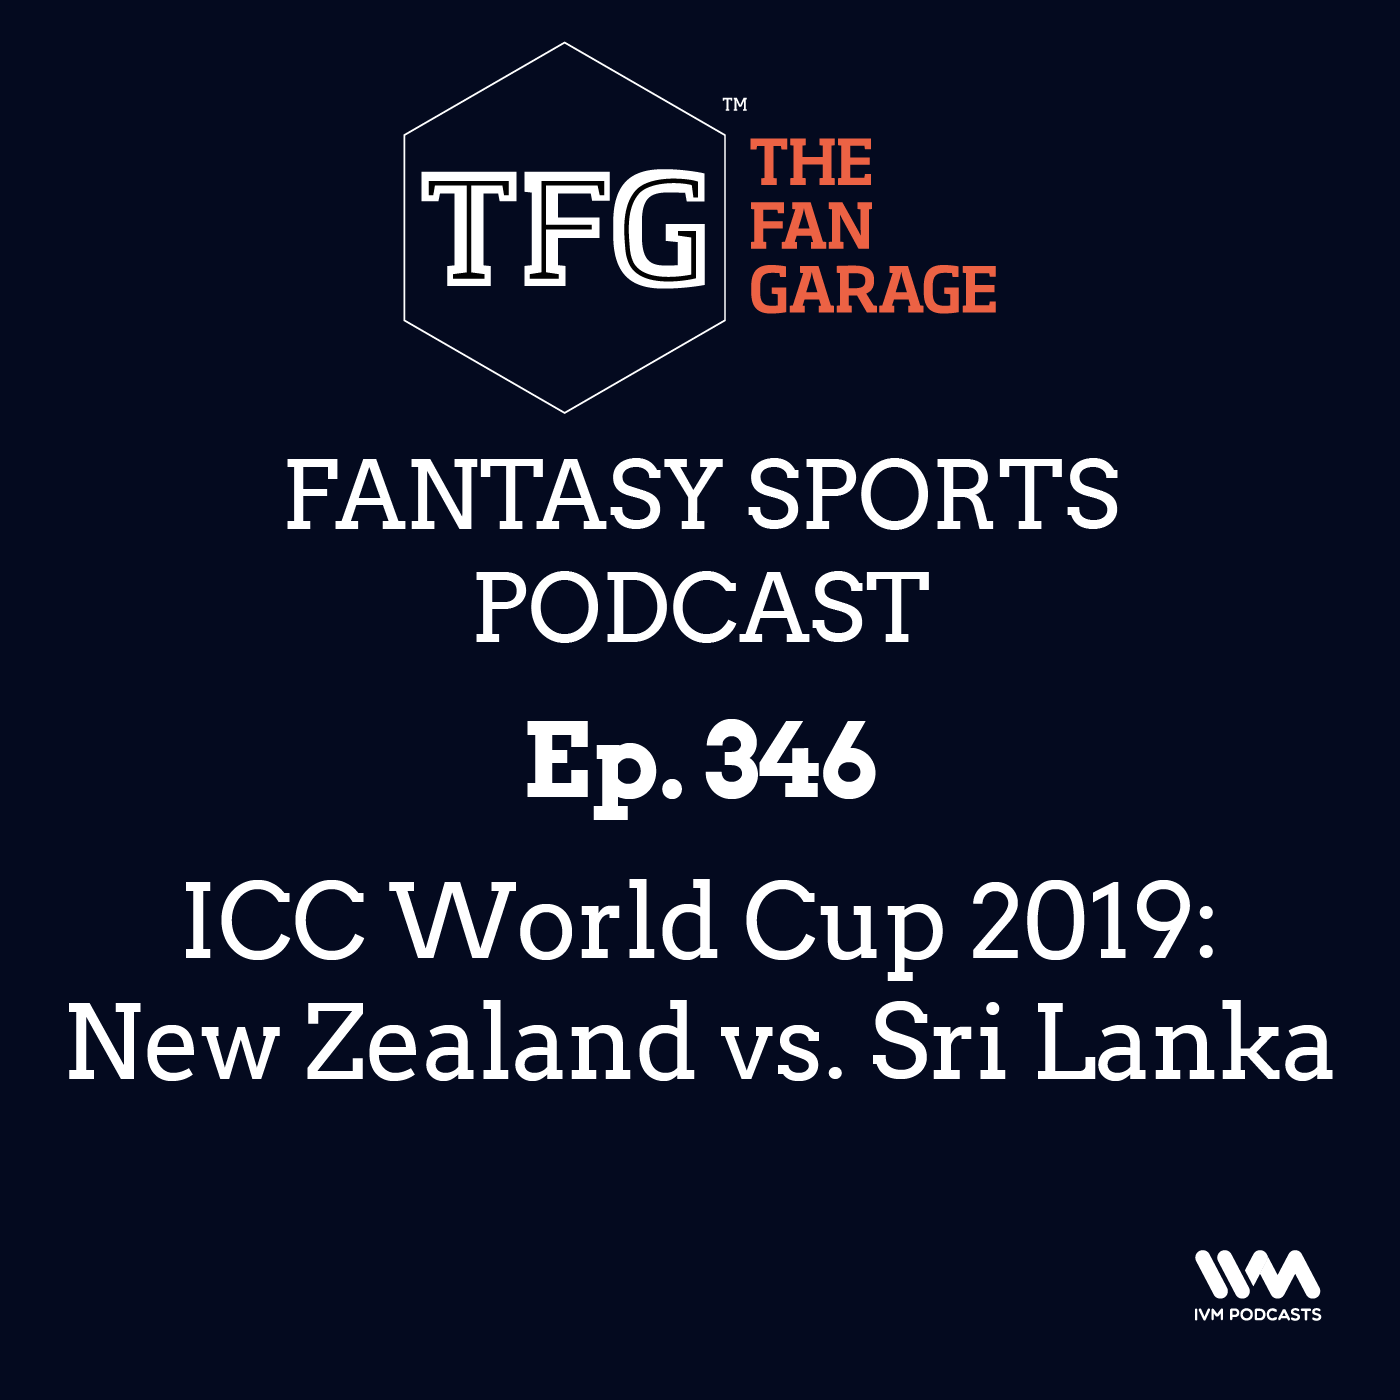 TFG Fantasy Sports Podcast Ep. 346: ICC World Cup 2019: New Zealand vs. Sri Lanka